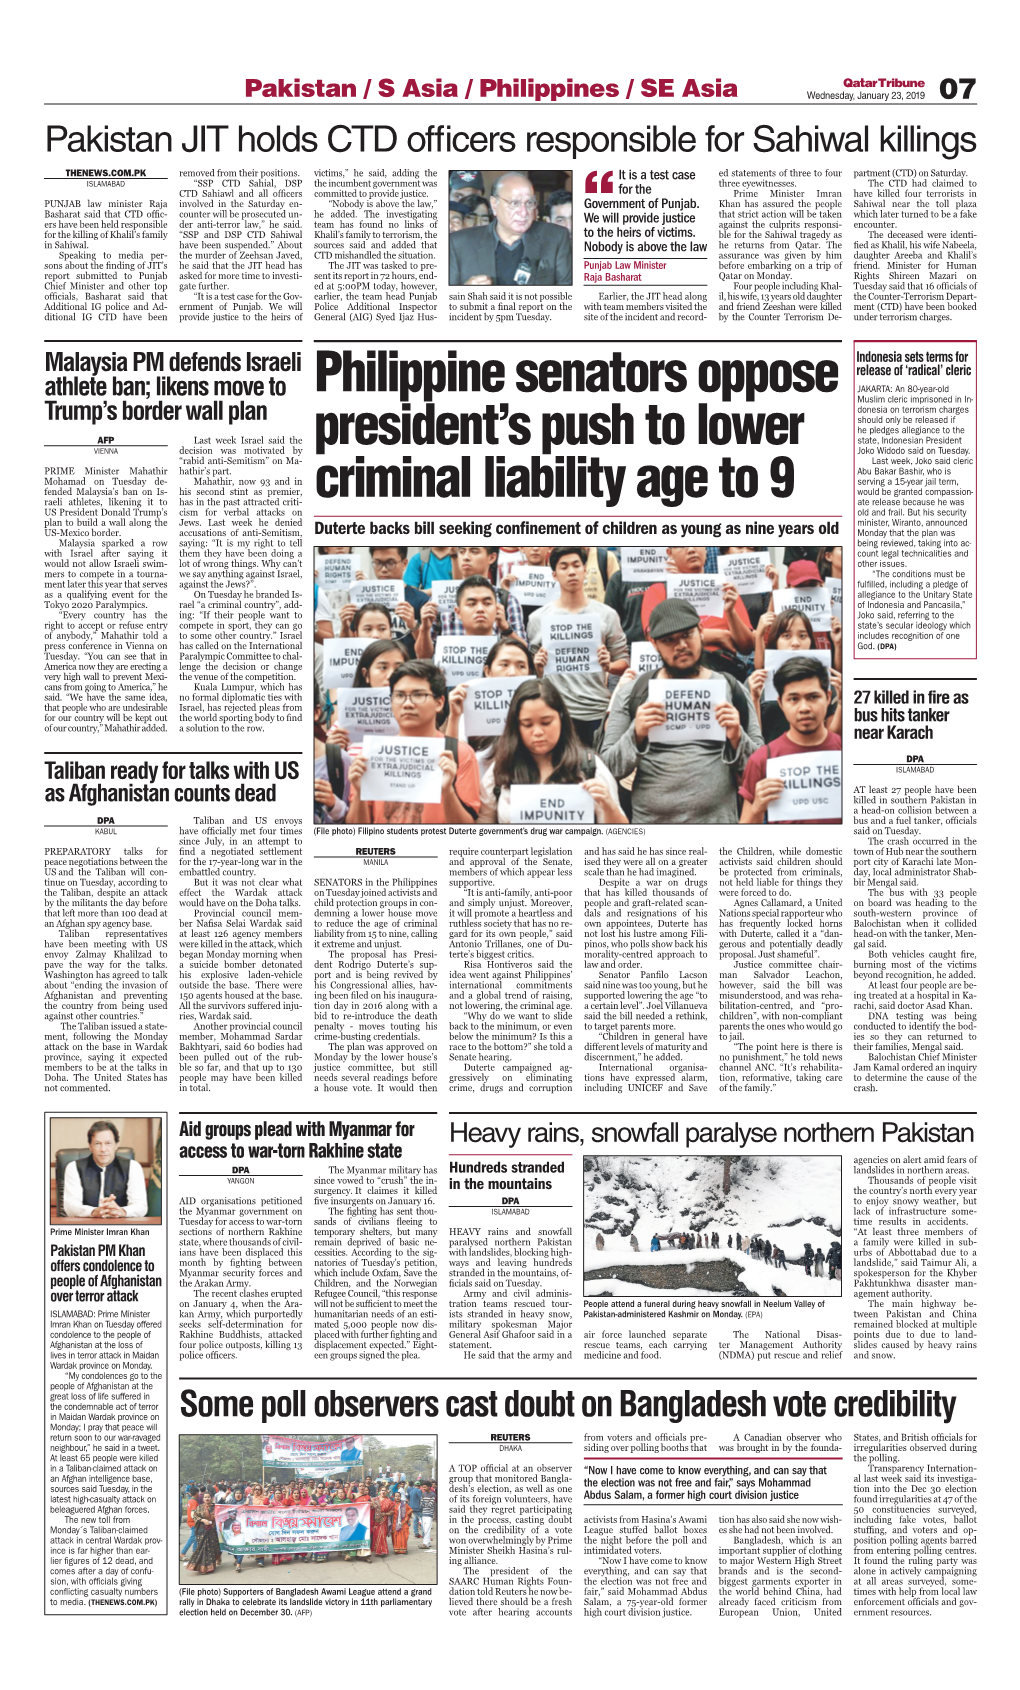 Philippine Senators Oppose President's Push to Lower Criminal